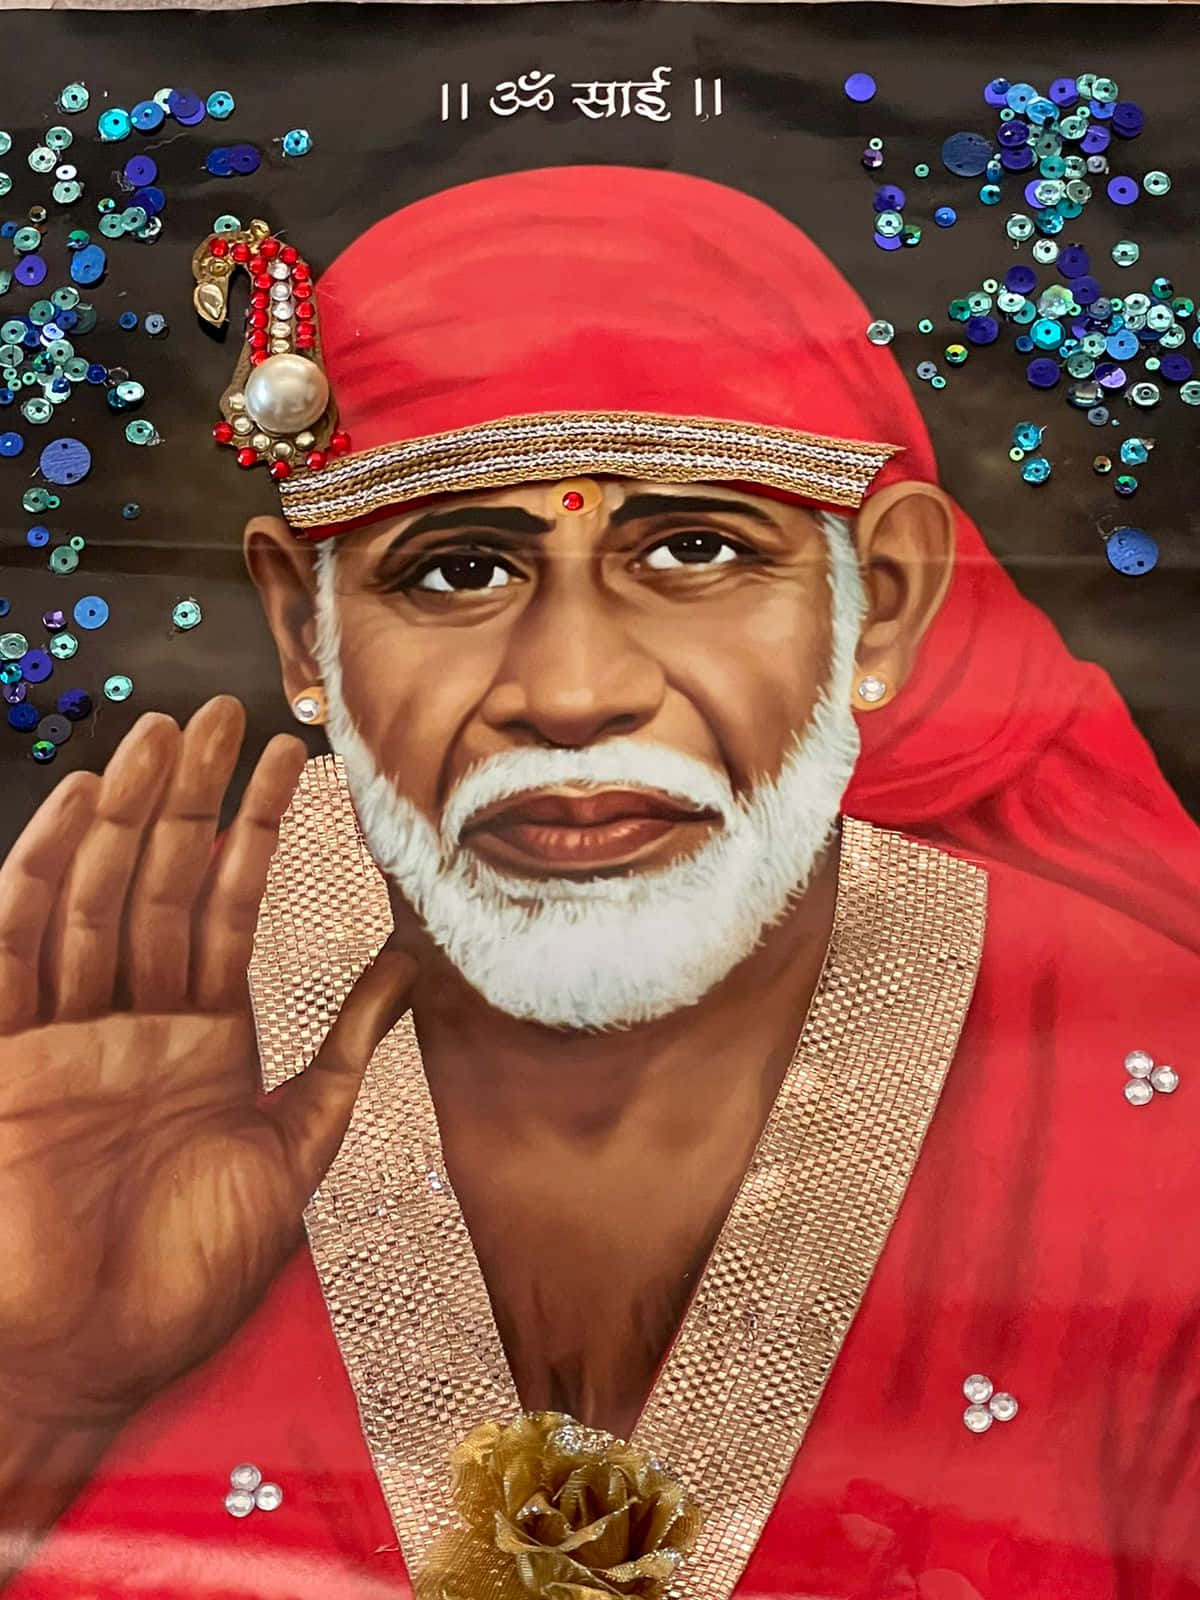 🔥 Lord Sai Baba Wallpaper Full HD Download Free | MyGodImages